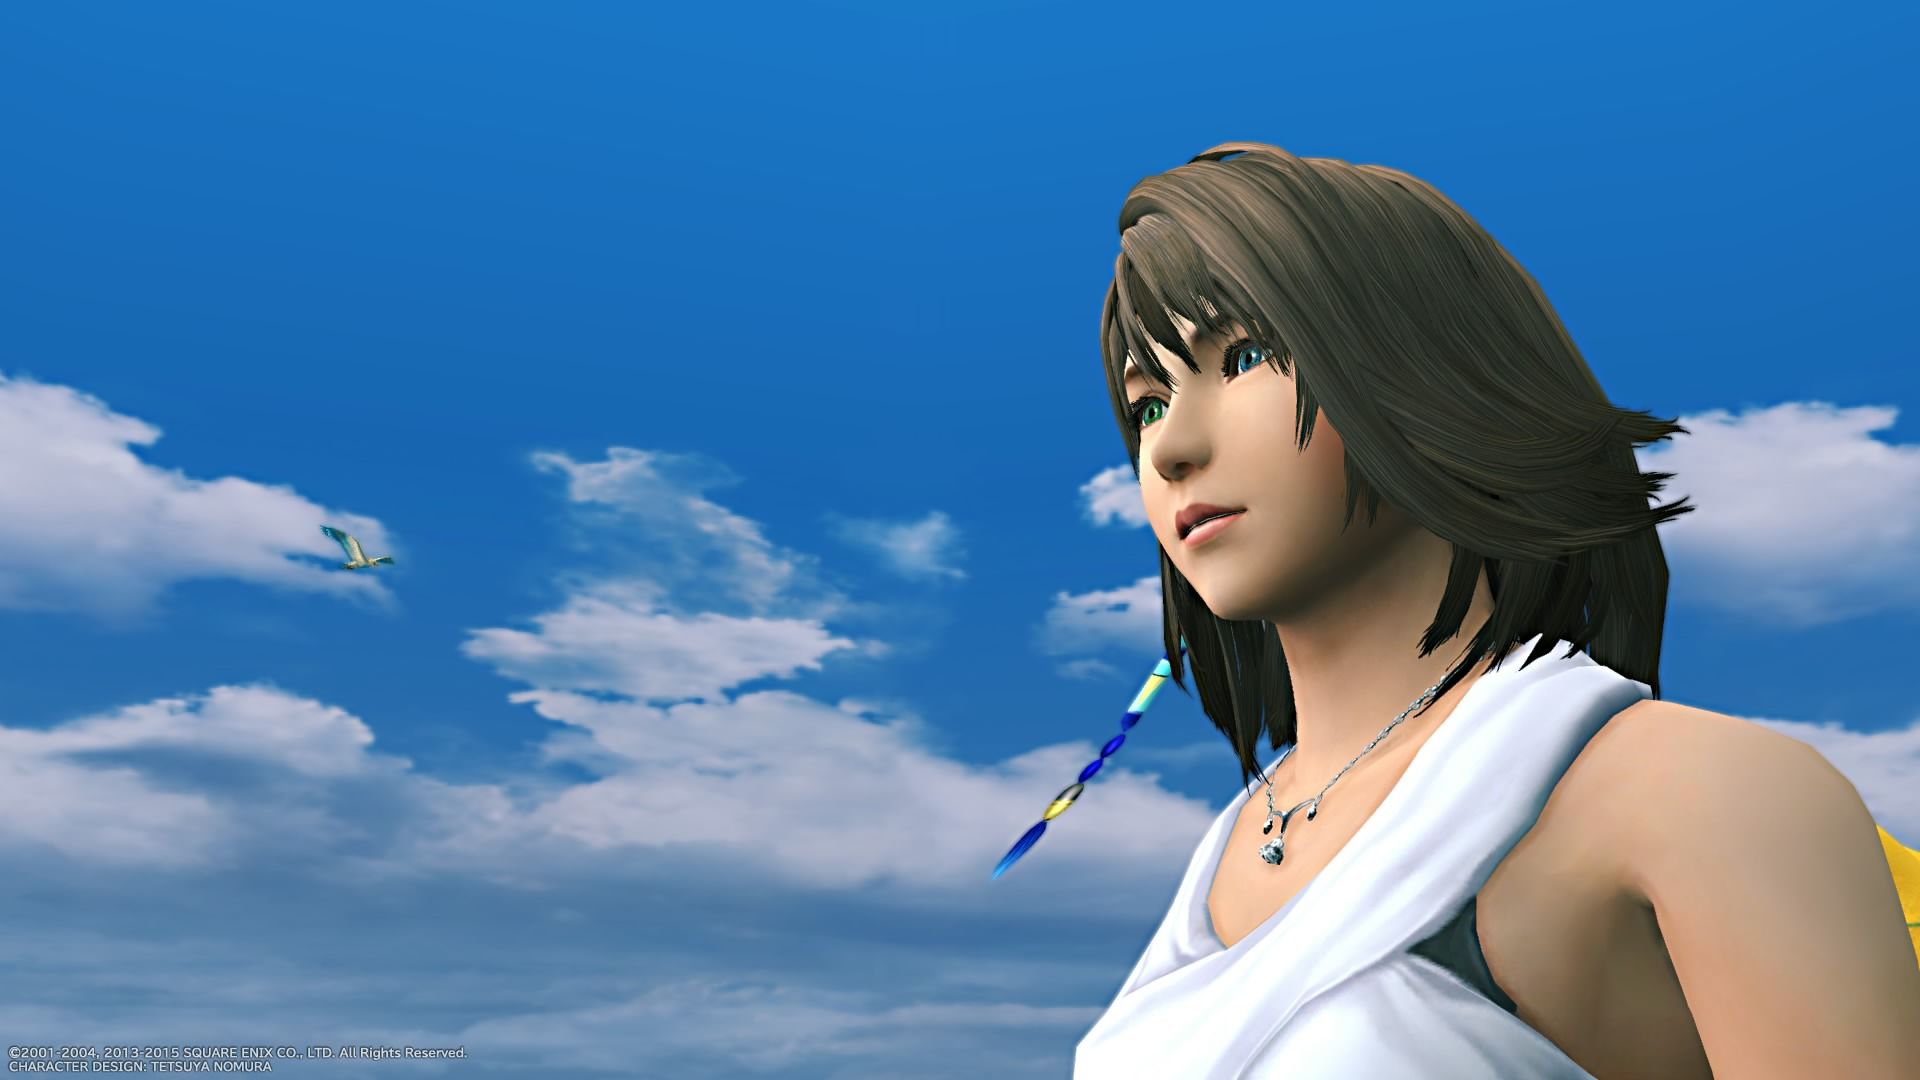 Final Fantasy x ПС 4. Final Fantasy x/x-2 ps4 версии. Final Fantasy x-2 PS Vita.